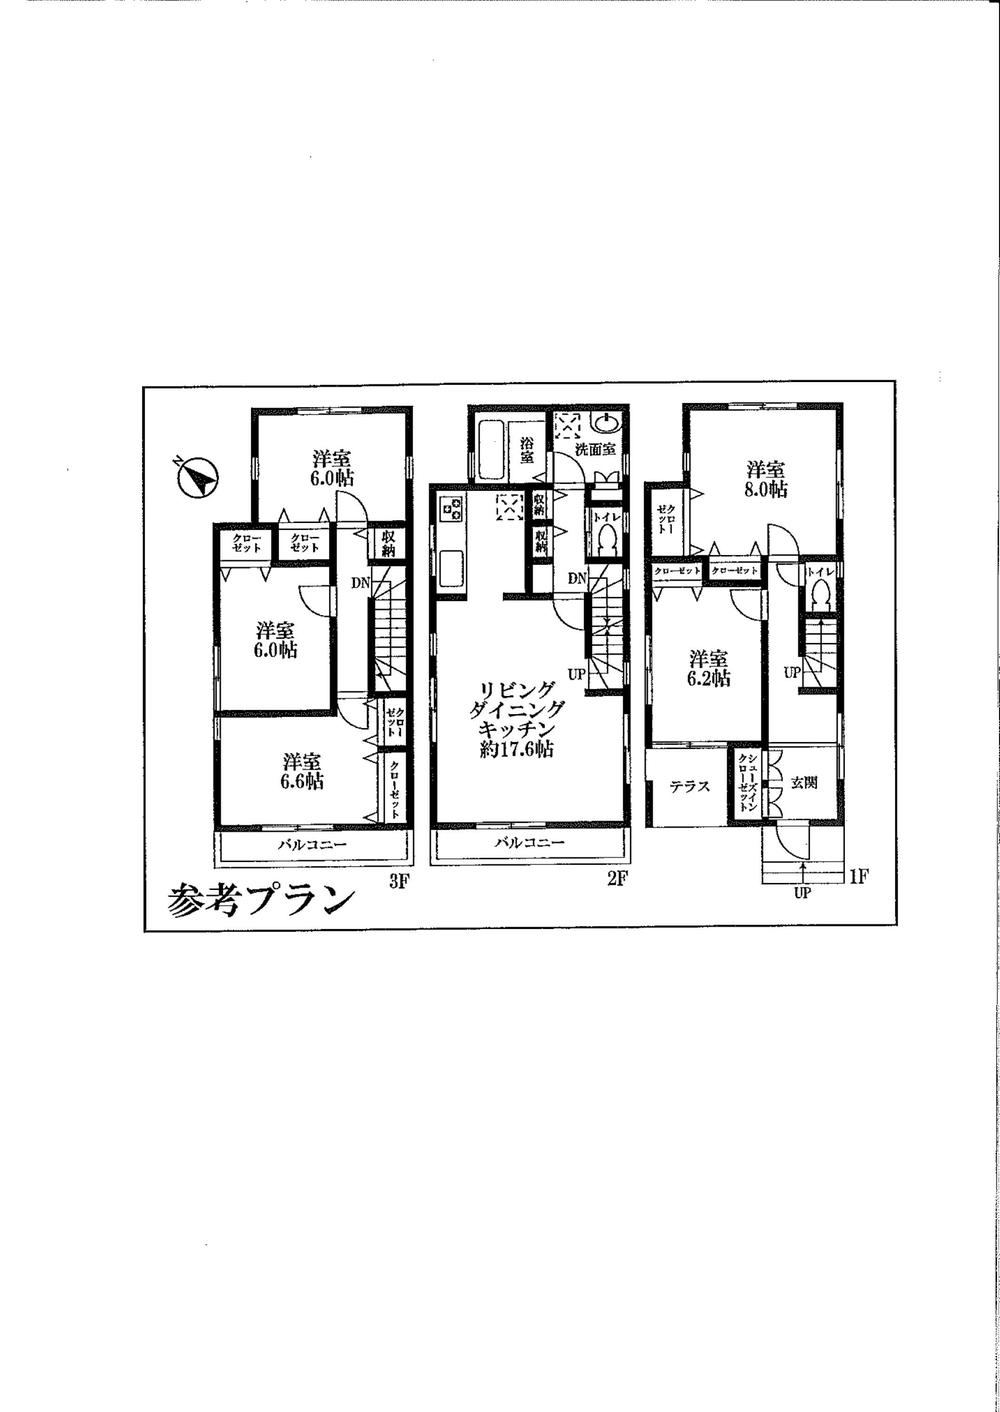 Building plan example (floor plan). Building plan example Building price 27 million yen, Building area 130.81 sq m